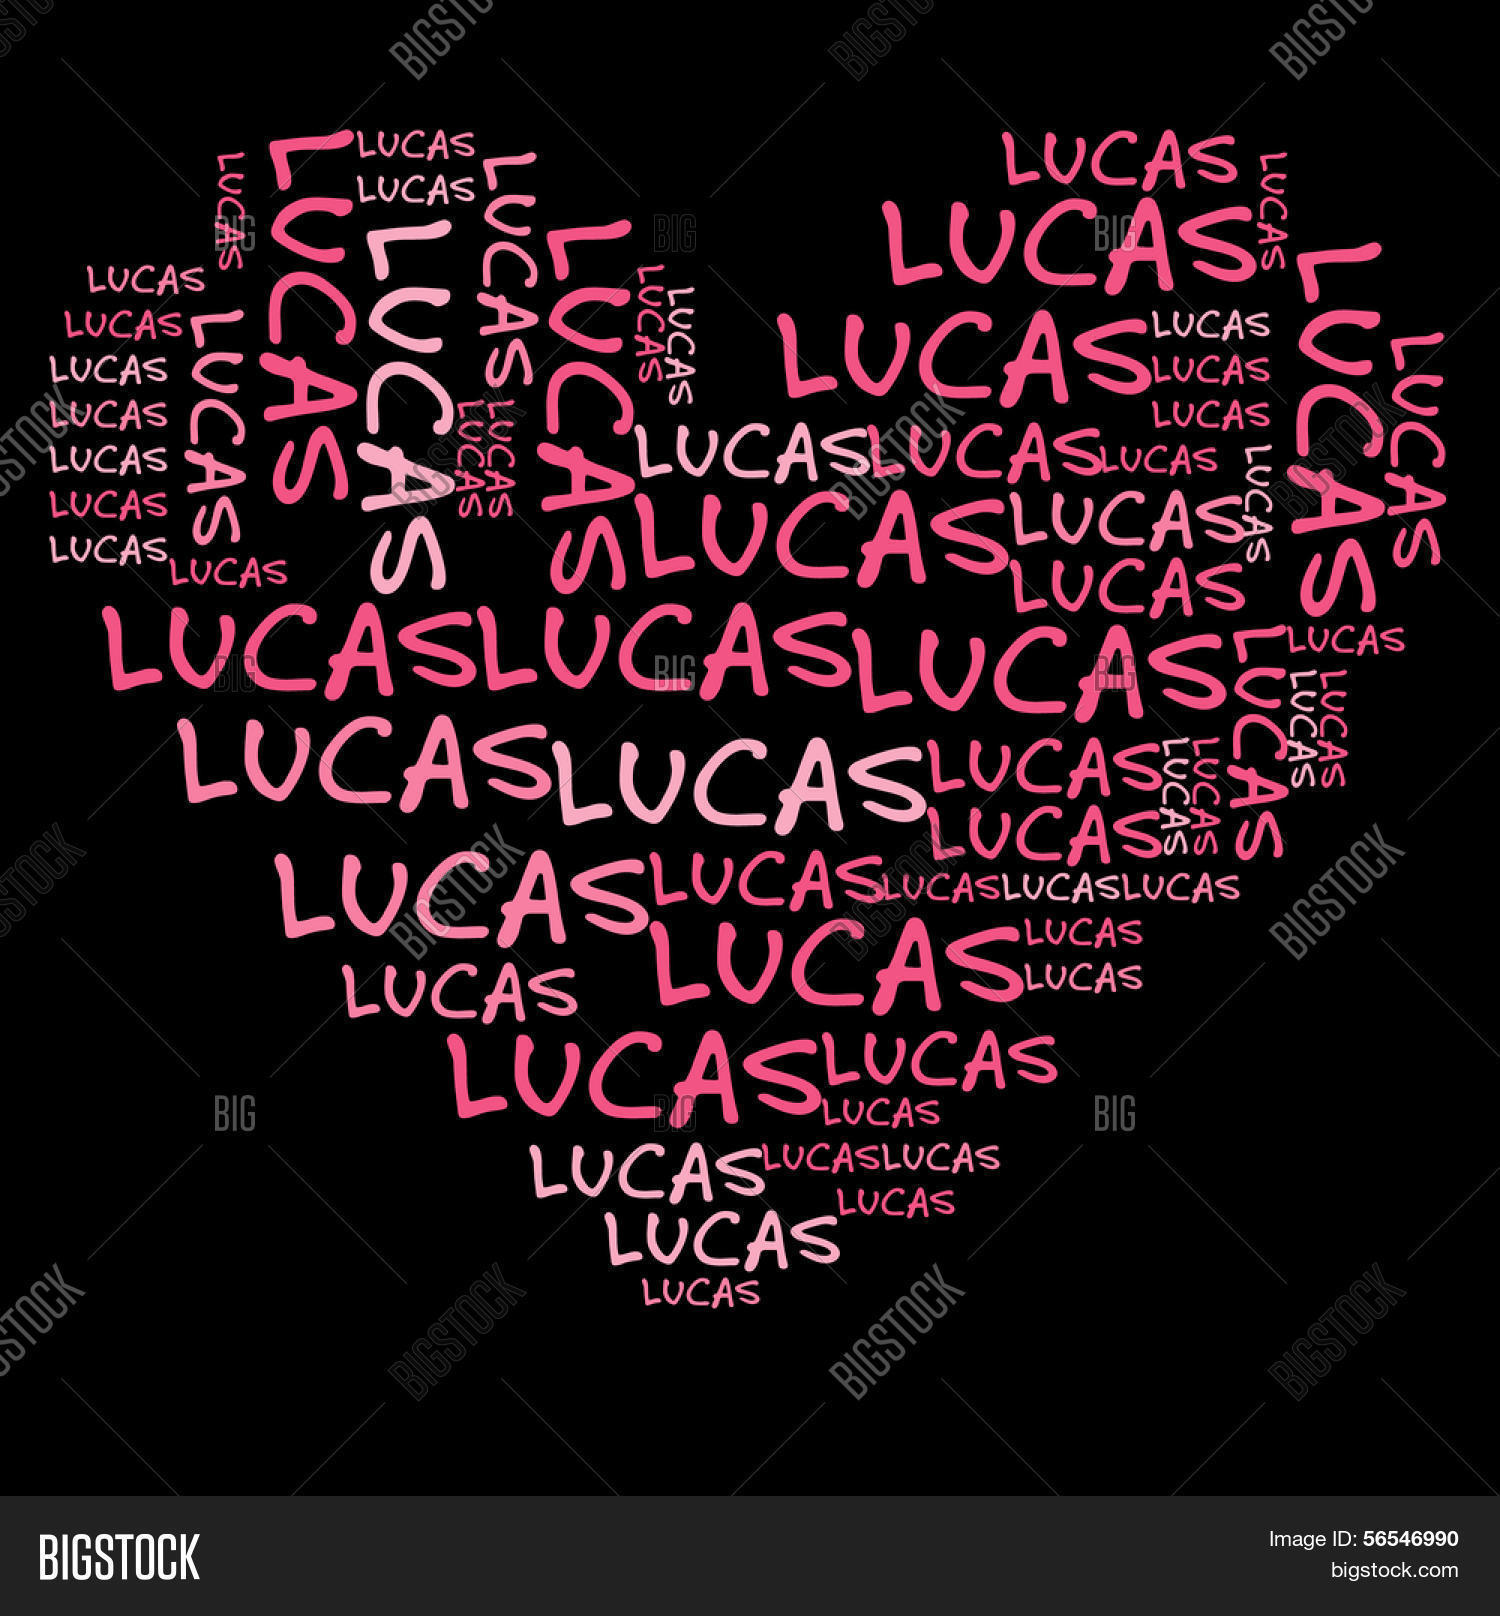 Lucas Word Cloud Pink Image Photo Trial Bigstock